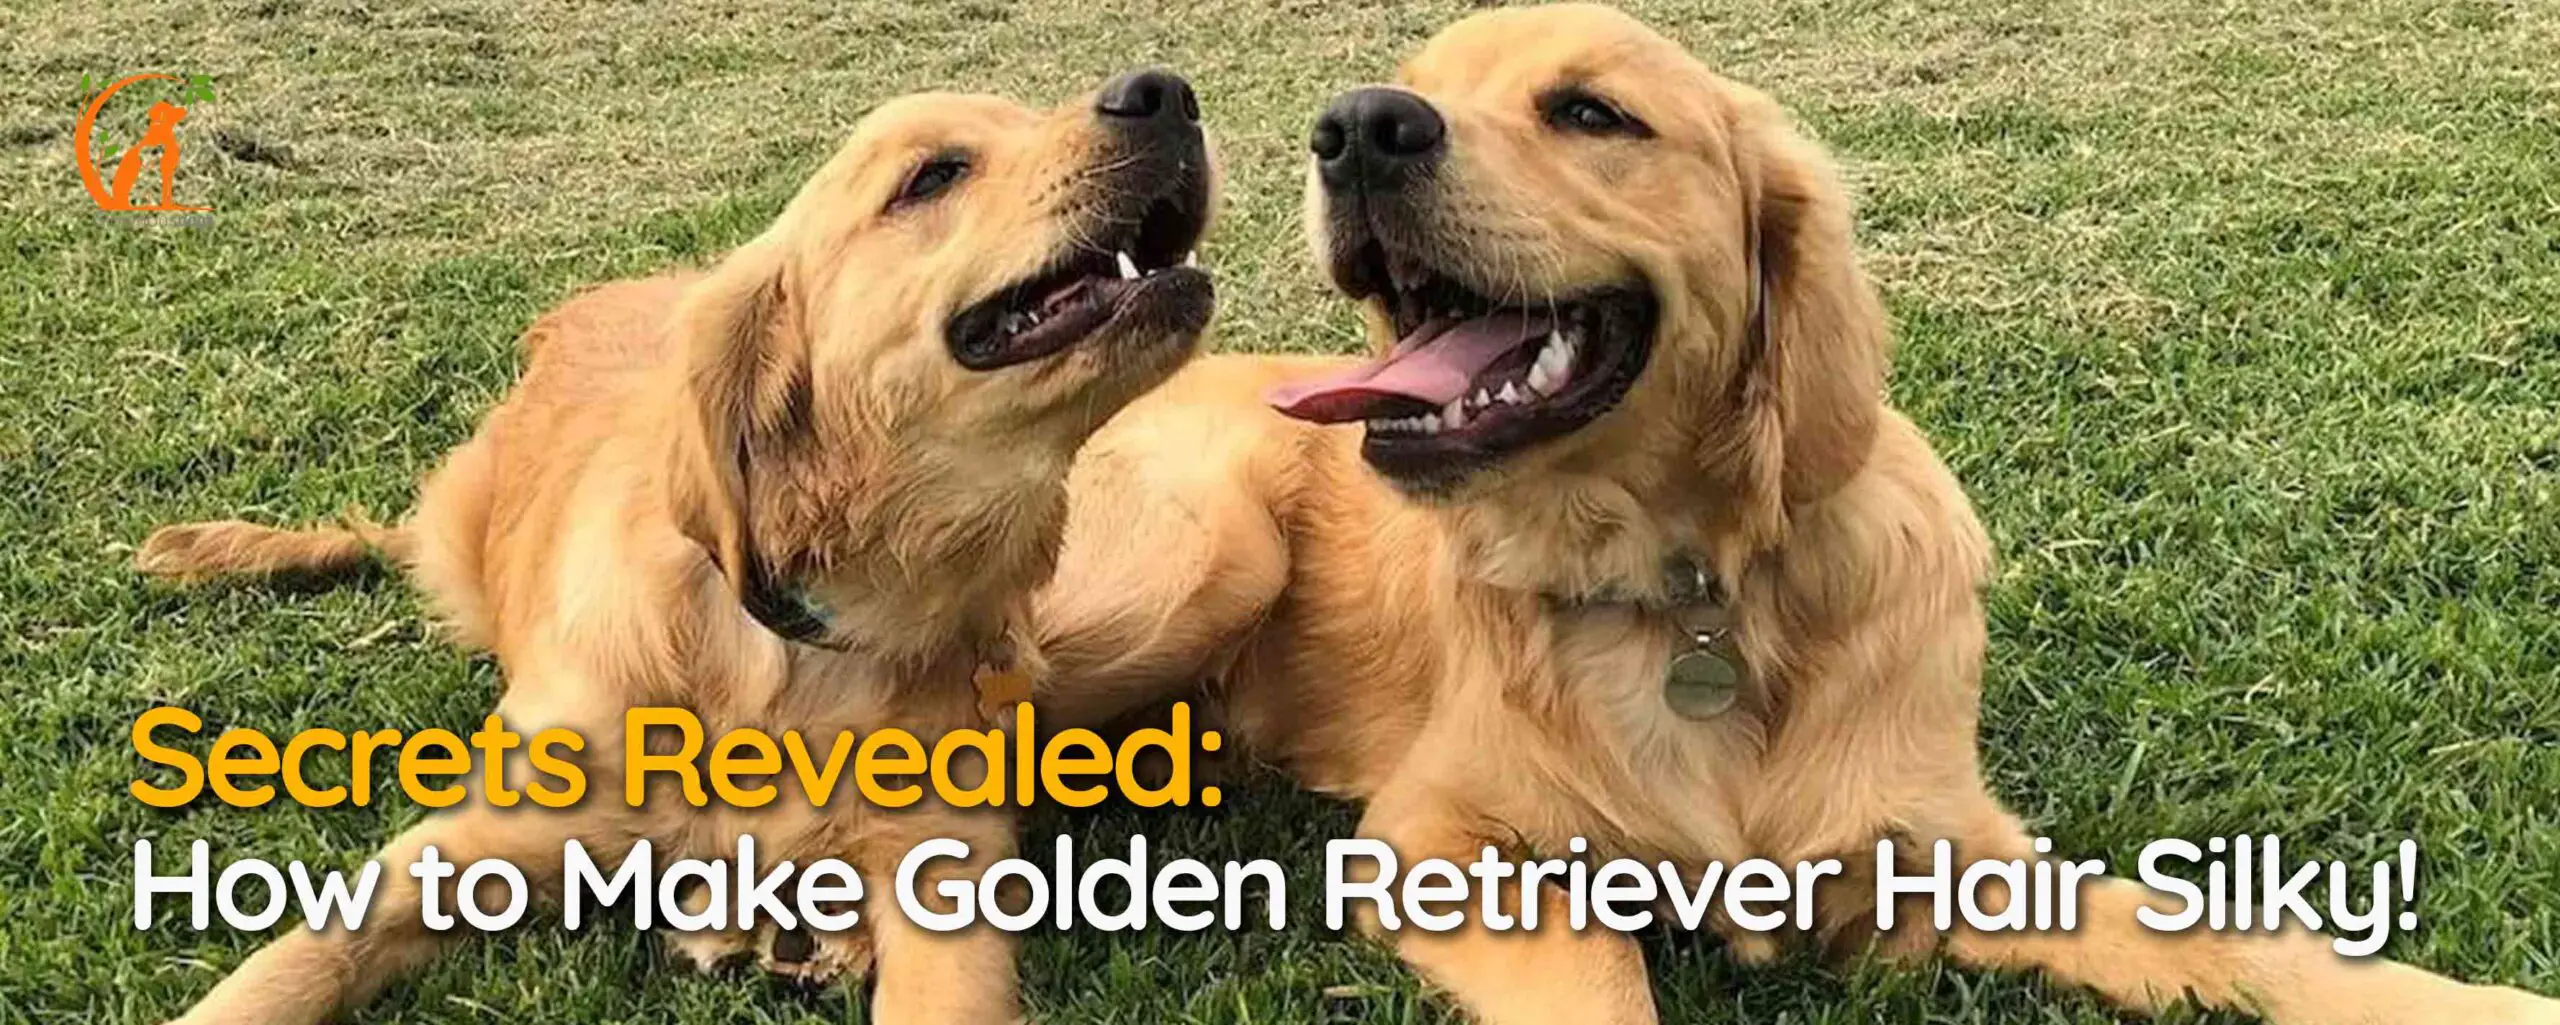 Secrets Revealed: How to Make Golden Retriever Hair Silky!